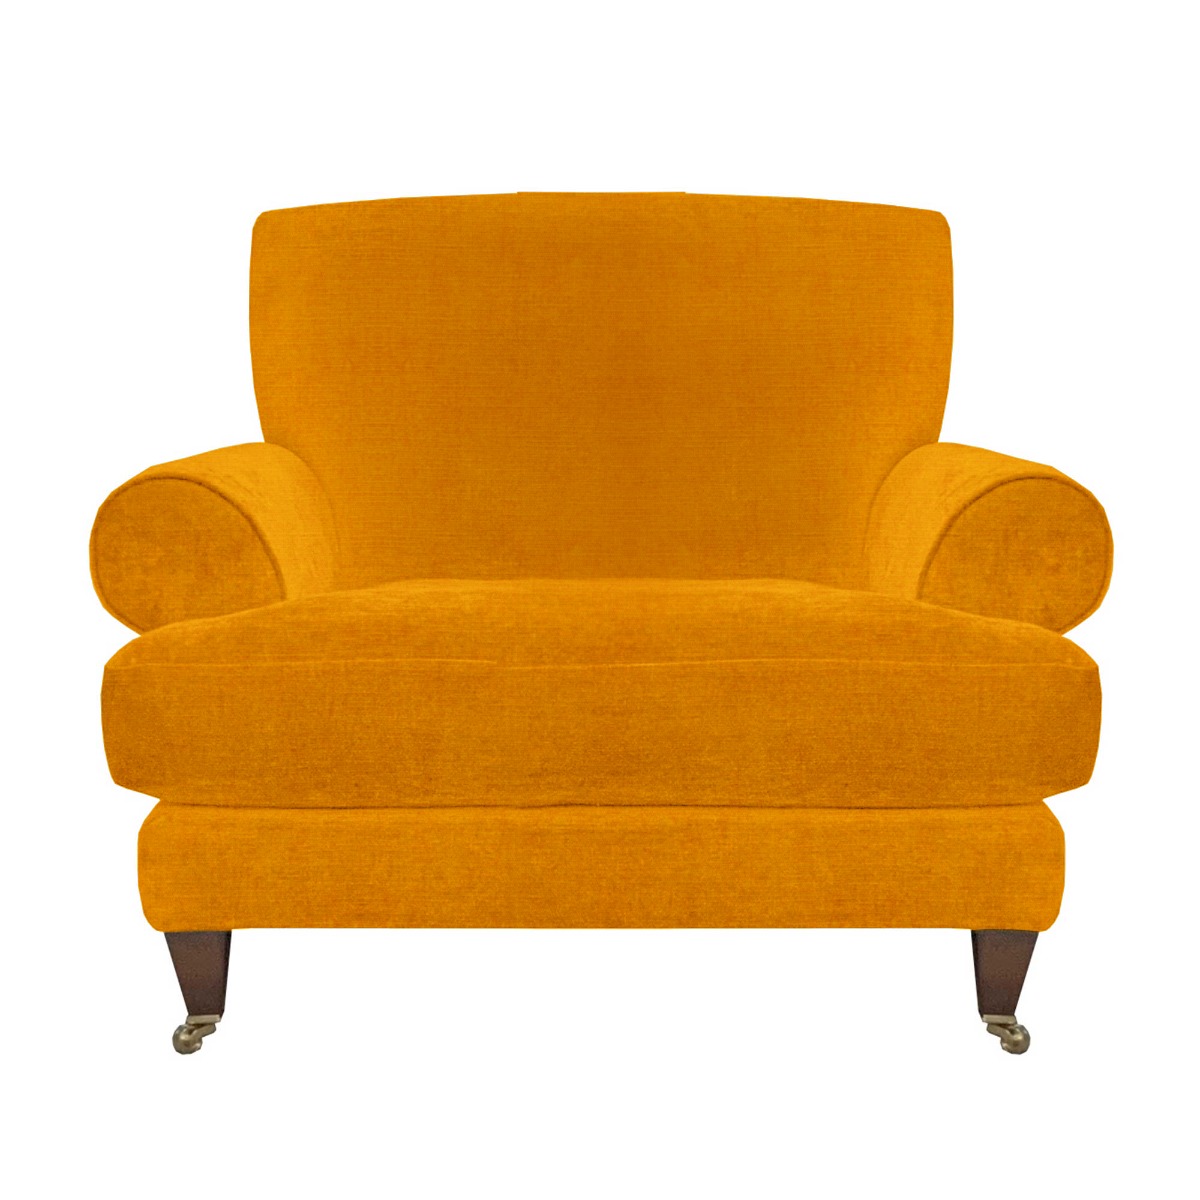 Fairlawn Standard Armchair, Yellow Fabric | Barker & Stonehouse